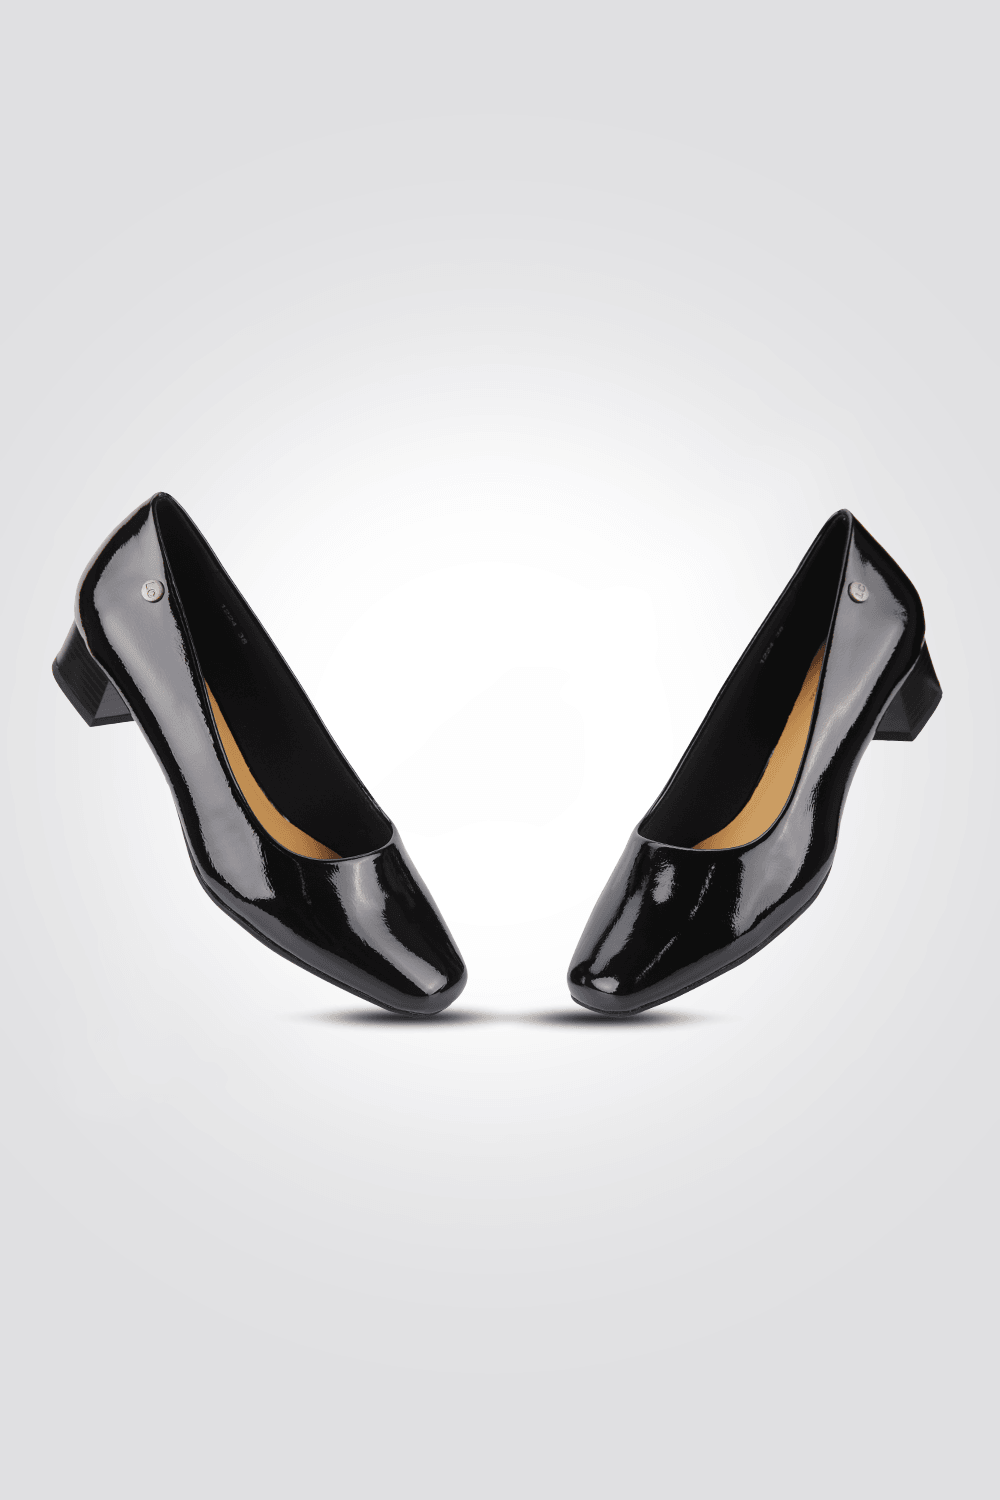 LADY COMFORT - נעל עקב חרטום מרובע בצבע שחור לקה - MASHBIR//365